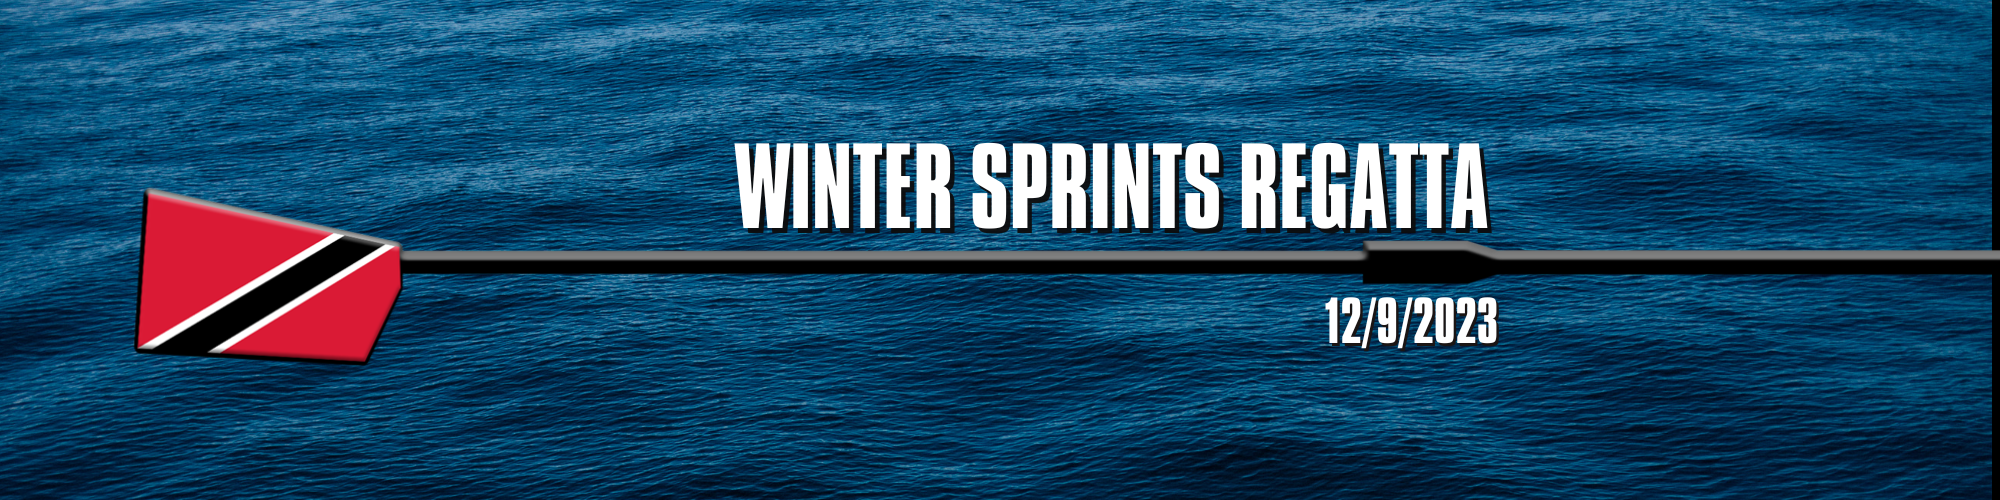 Winter Sprints Regatta 2023